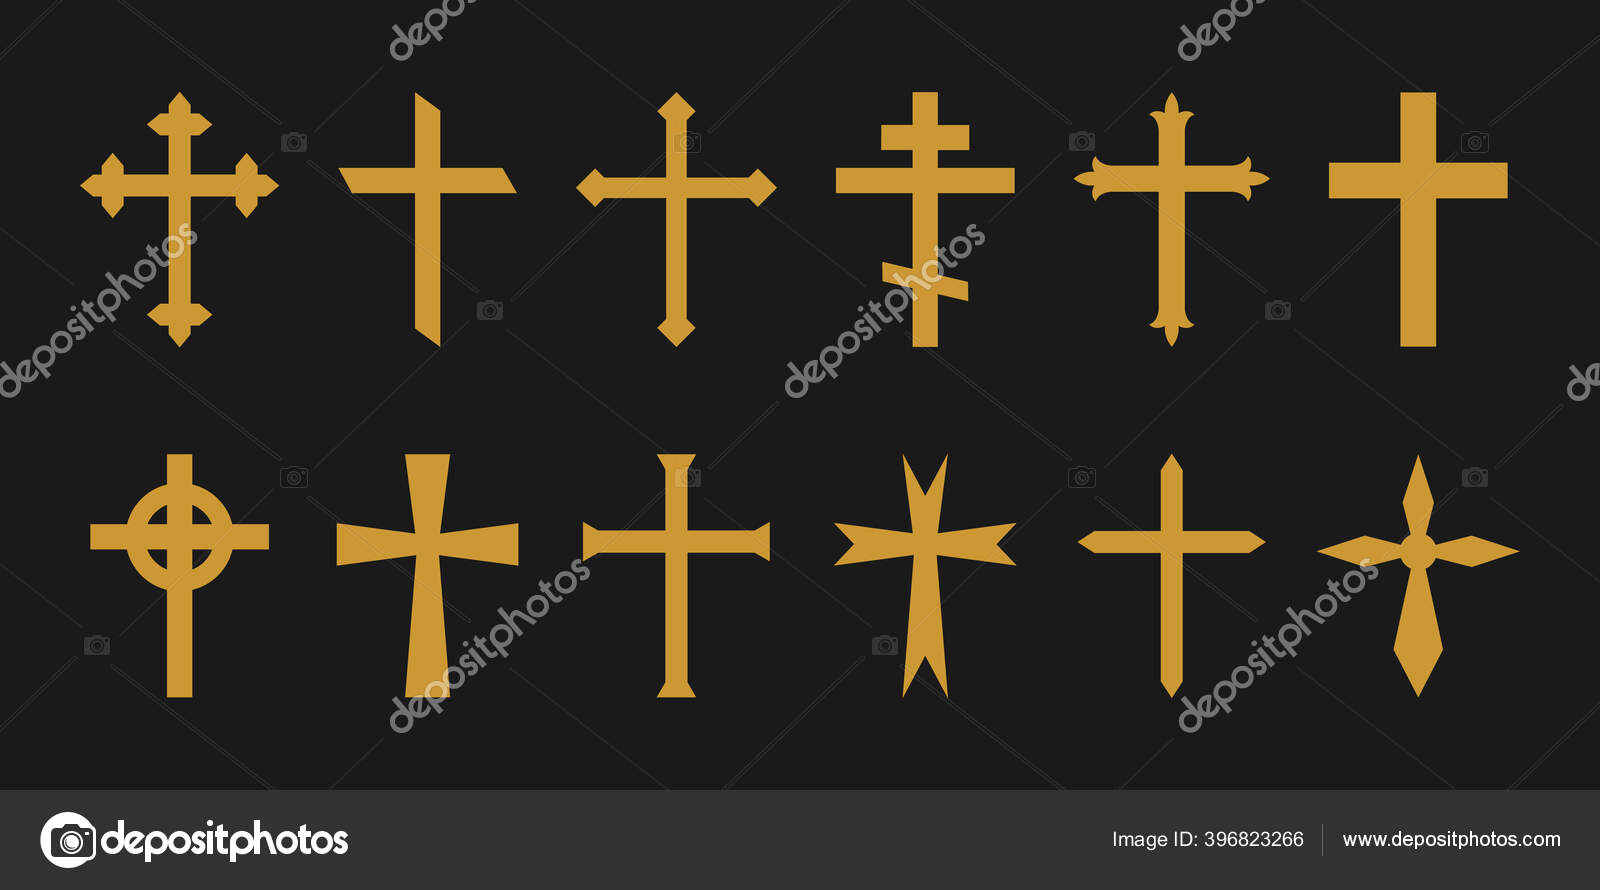 Gold Cross CATHOLIC SIGN